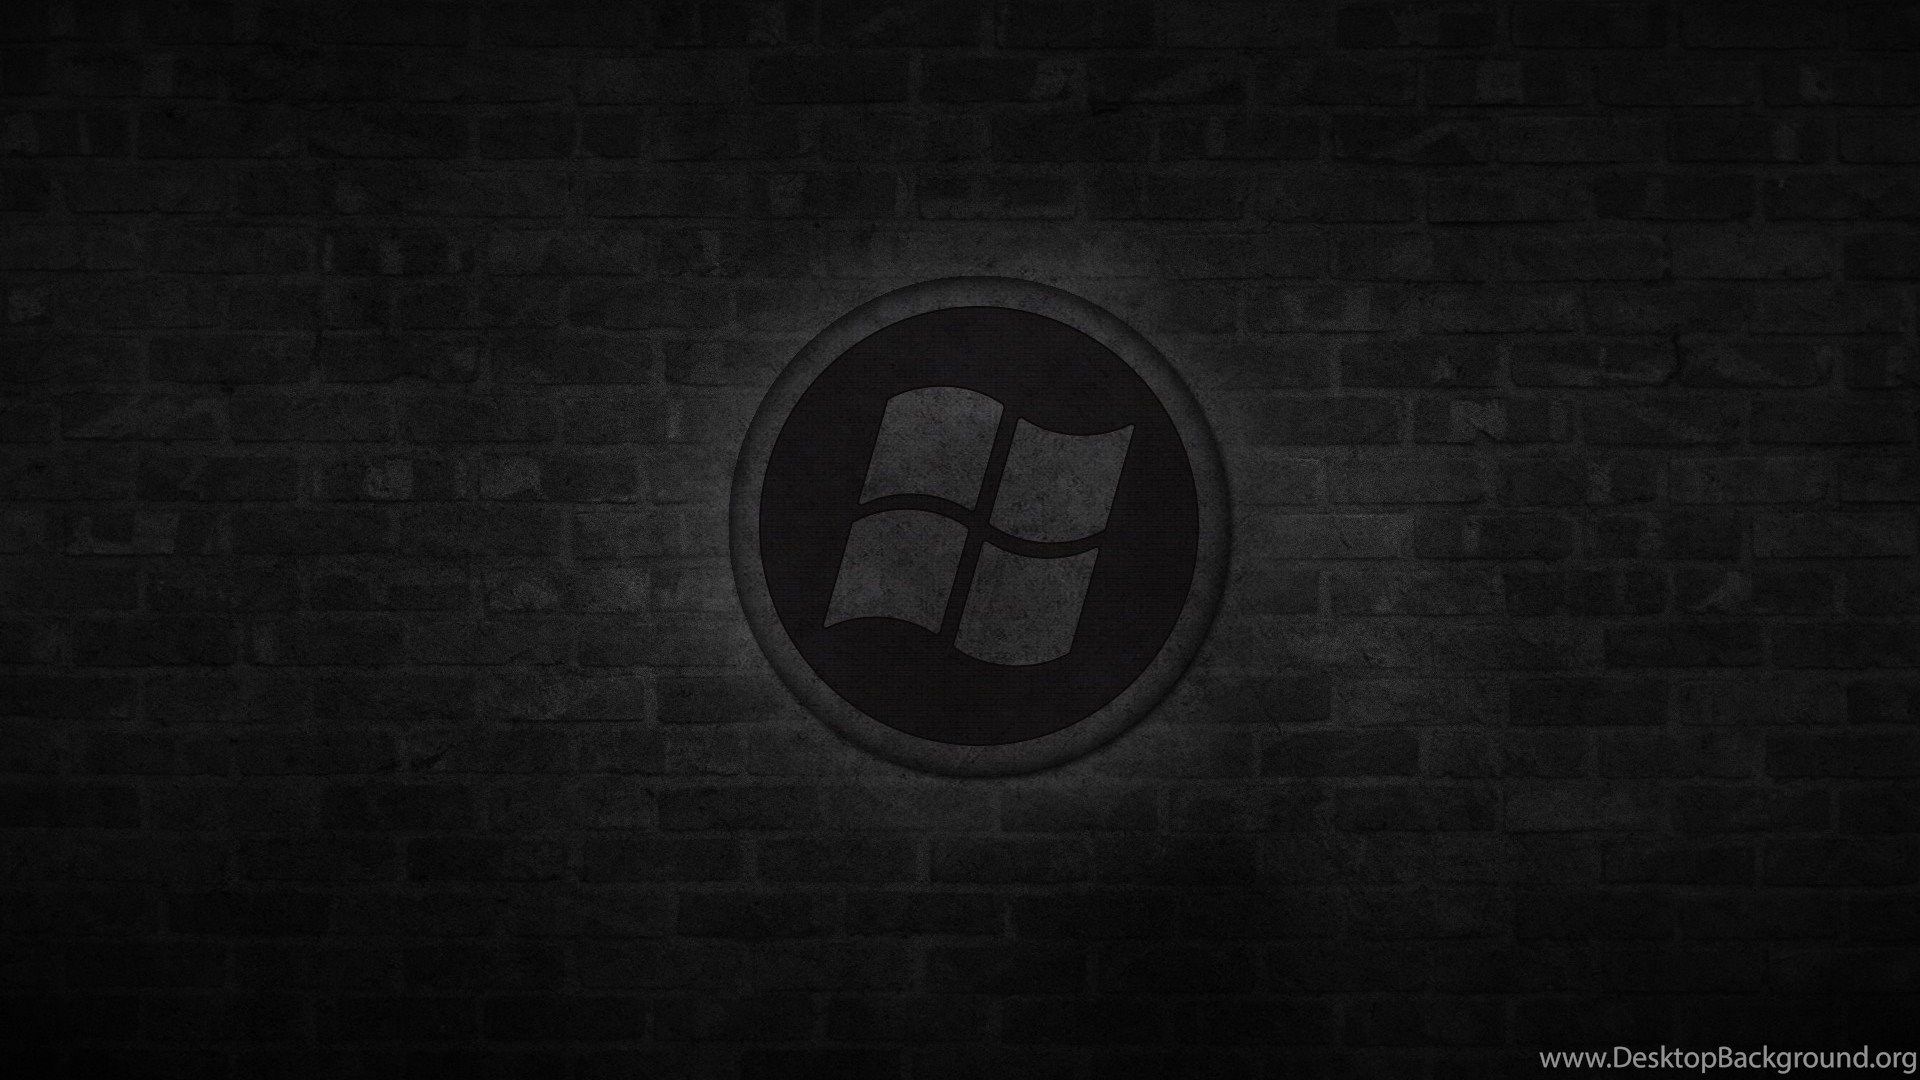 Dark Windows Logo Wallpaper Free .wallpaperaccess.com